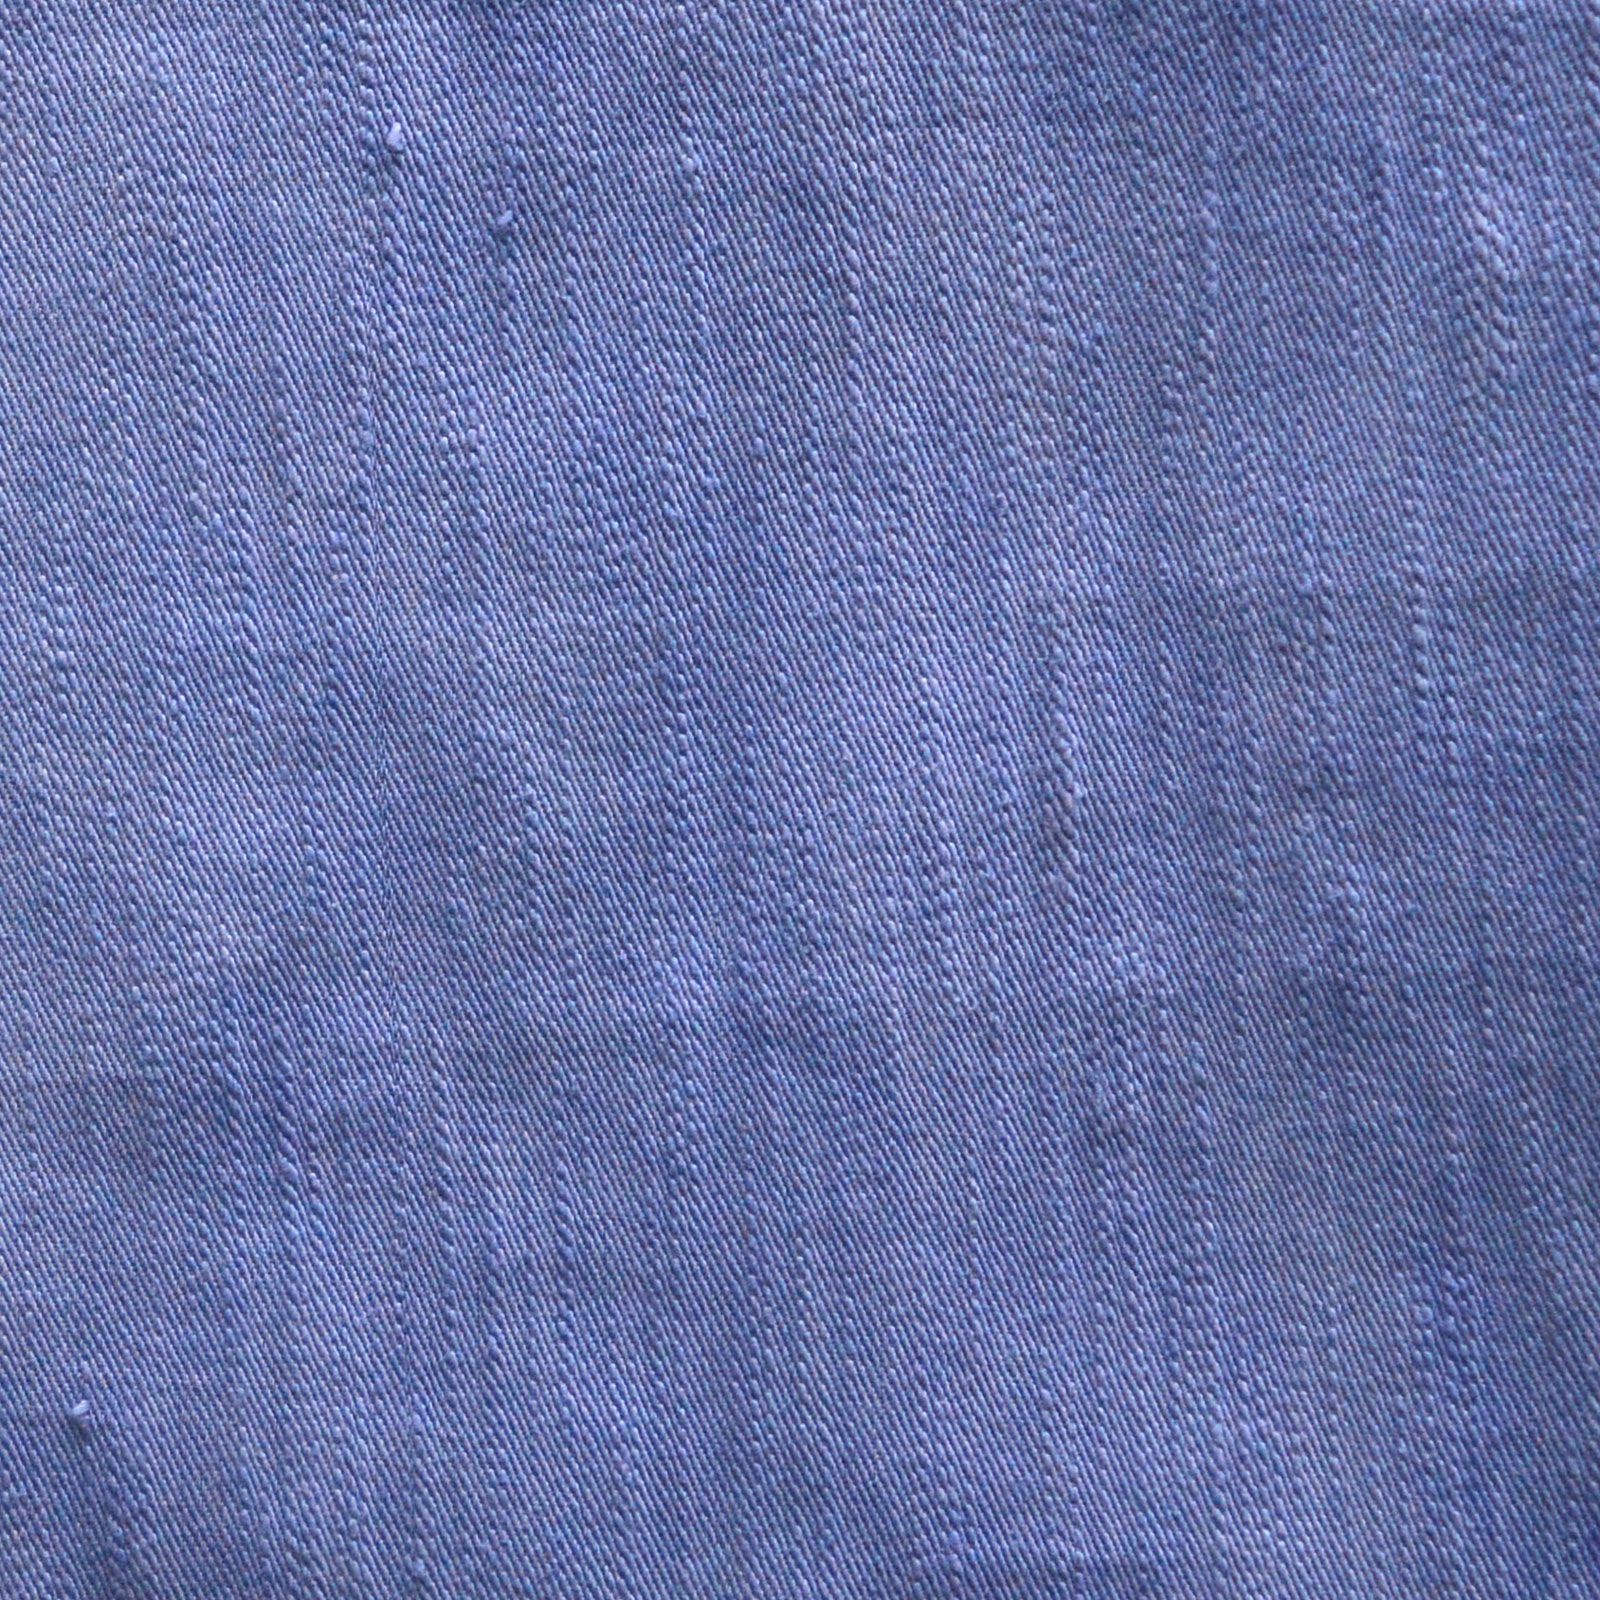 Handloom Denim Fabric - Natural Indigo Dyed • Vritti Designs